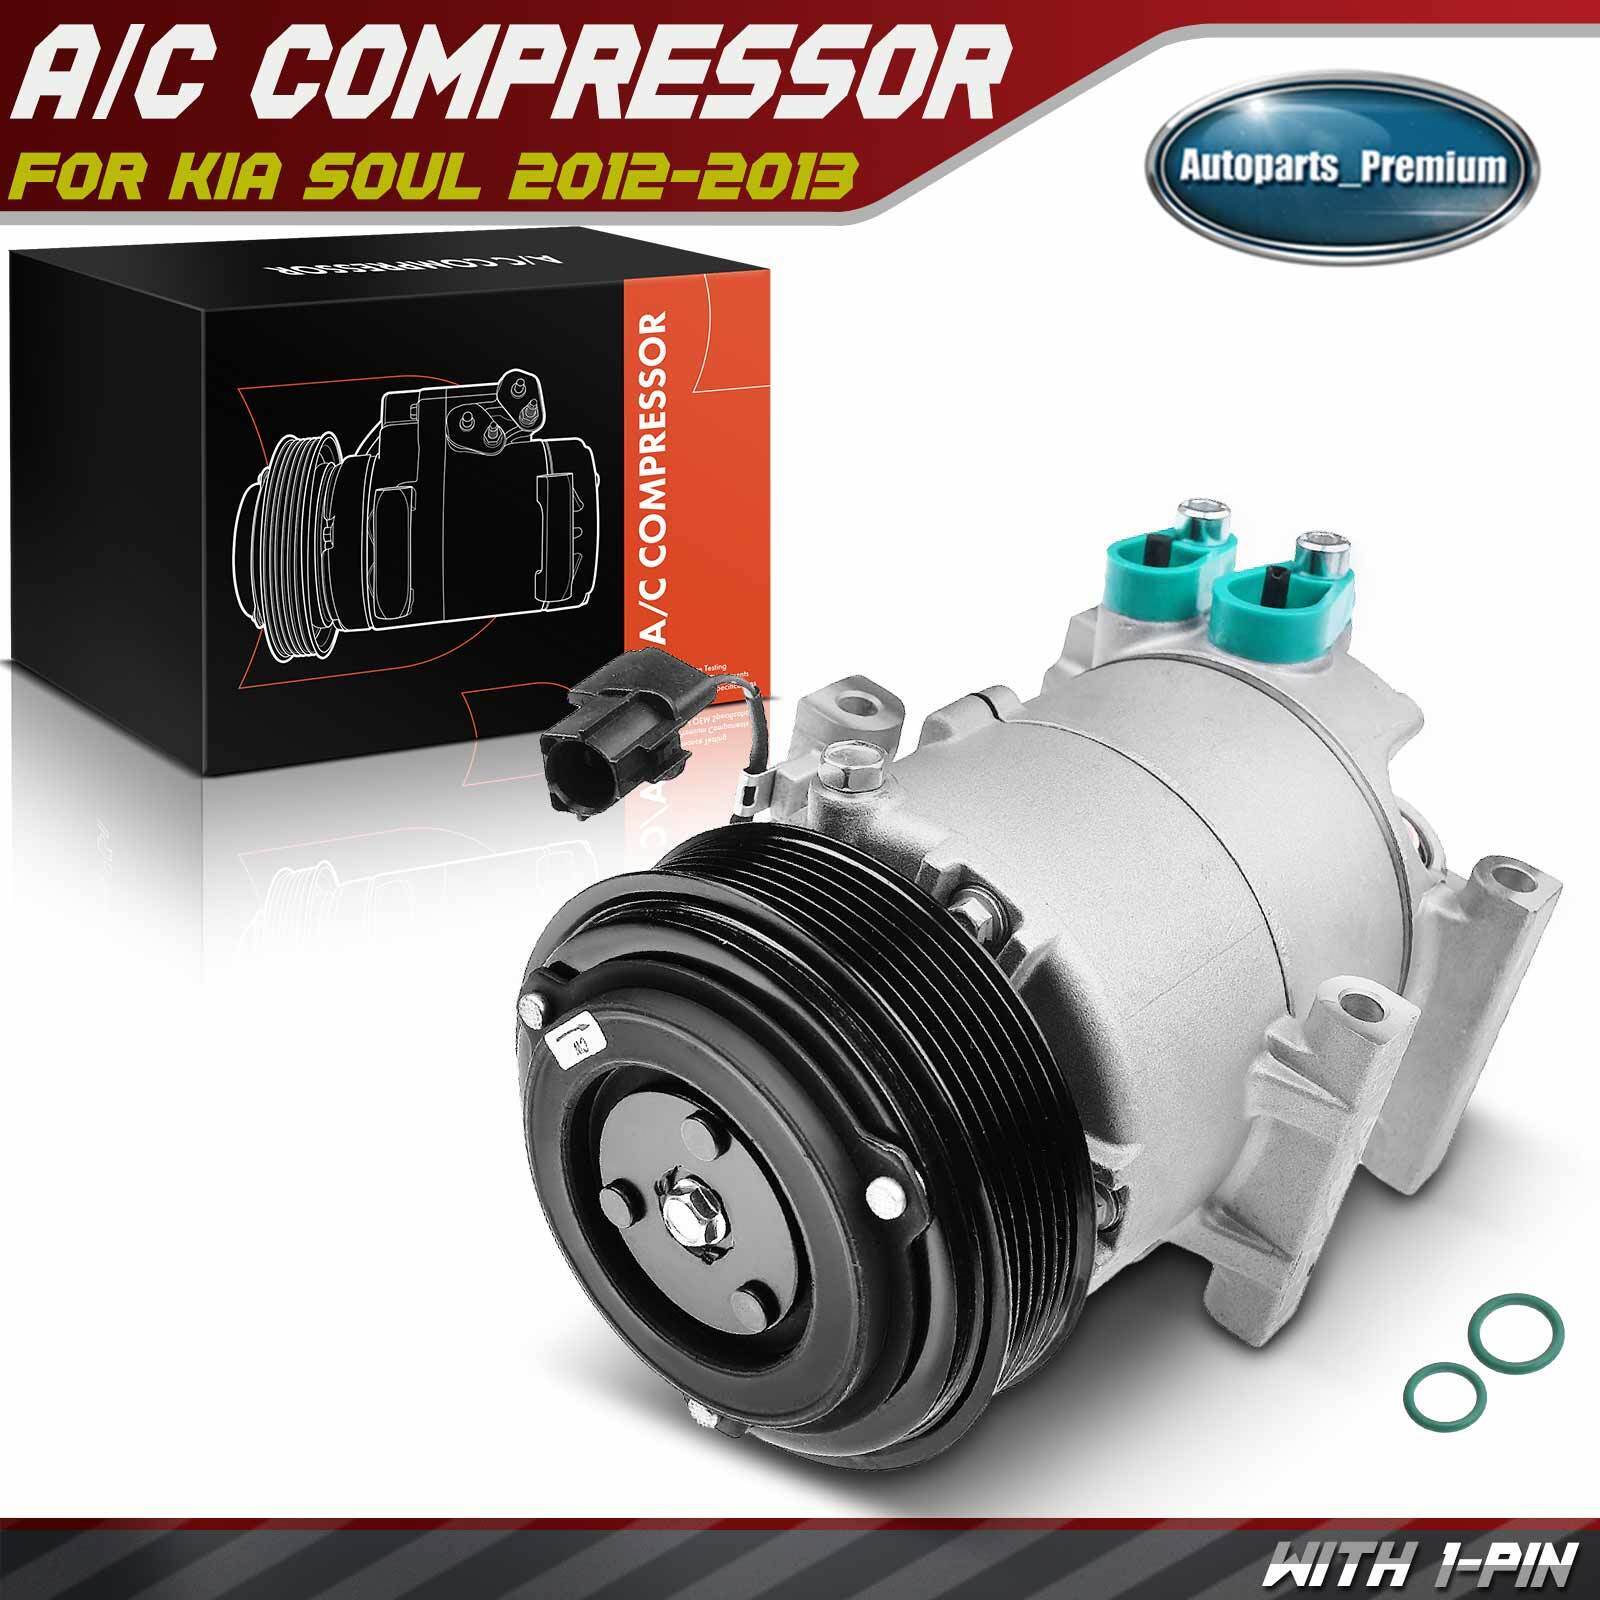 New AC Compressor with Clutch for Kia Soul 2012-2013 L4 1.6L 977012K600 PAG 46